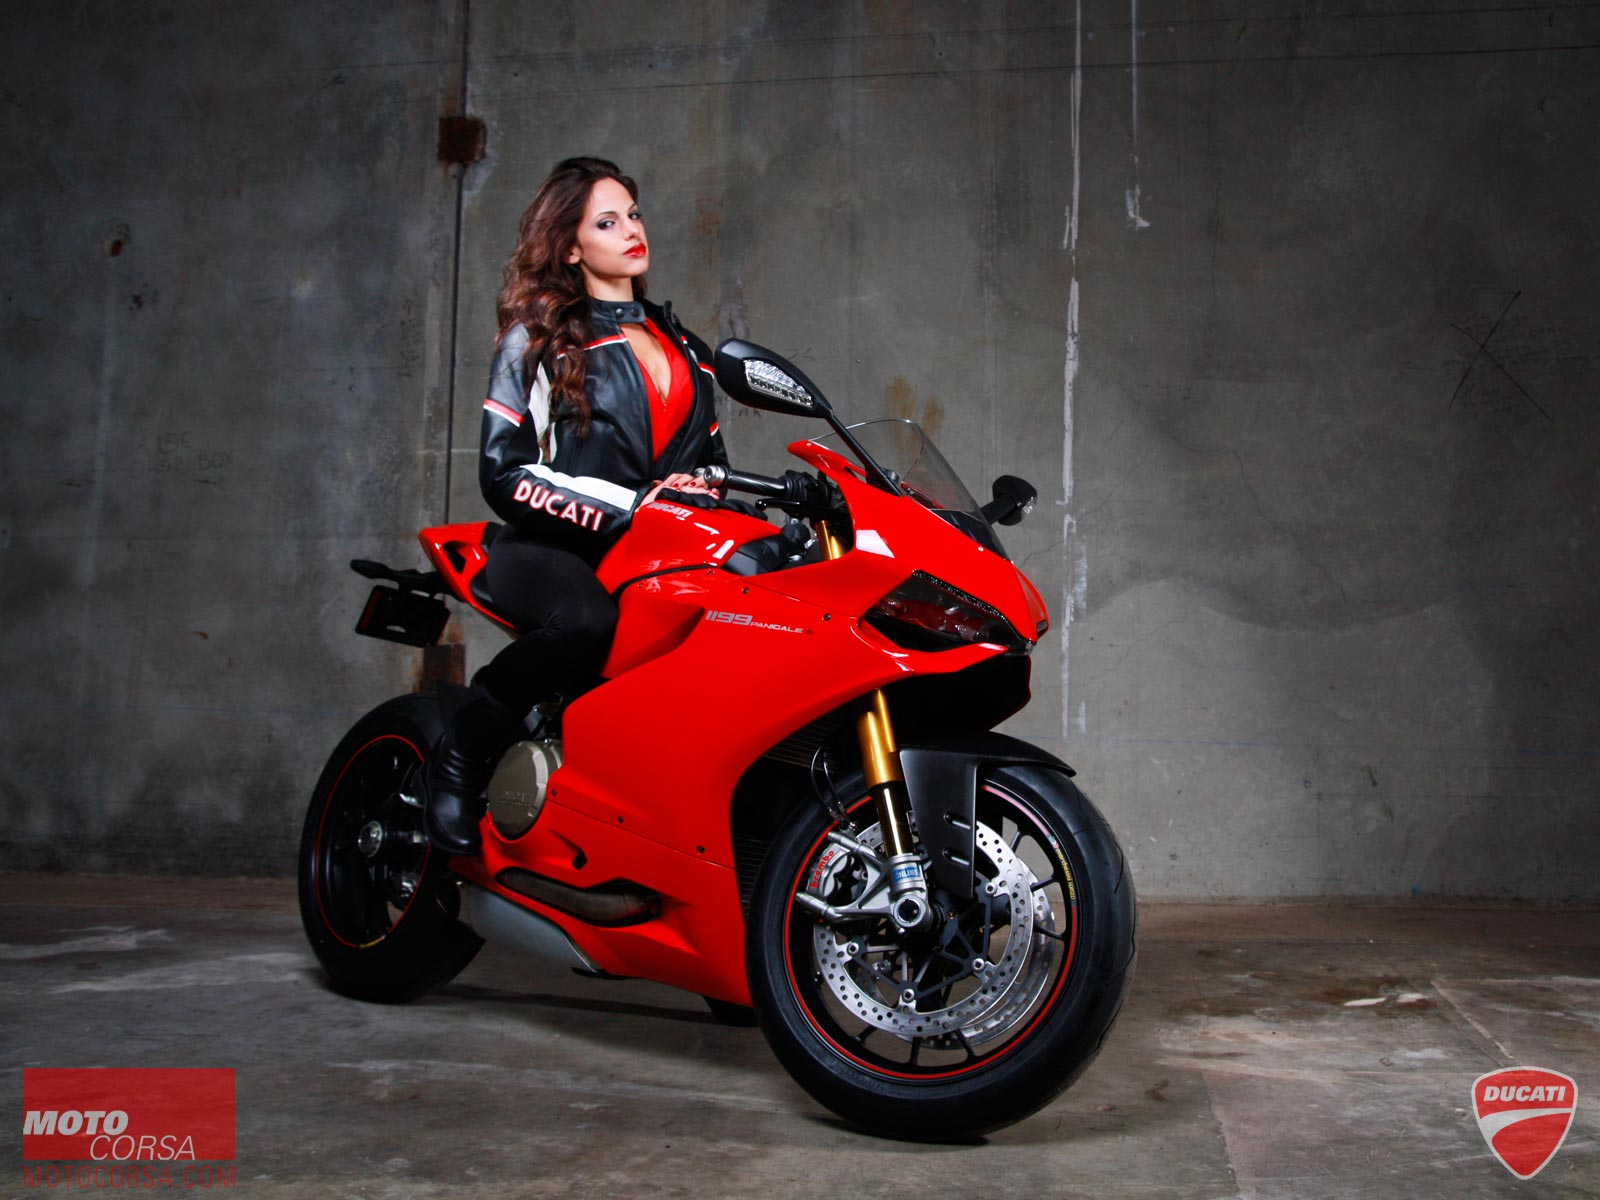 Seducati Wallpapers Motocorsa Portland Oreg - Ducati Sign Girl , HD Wallpaper & Backgrounds